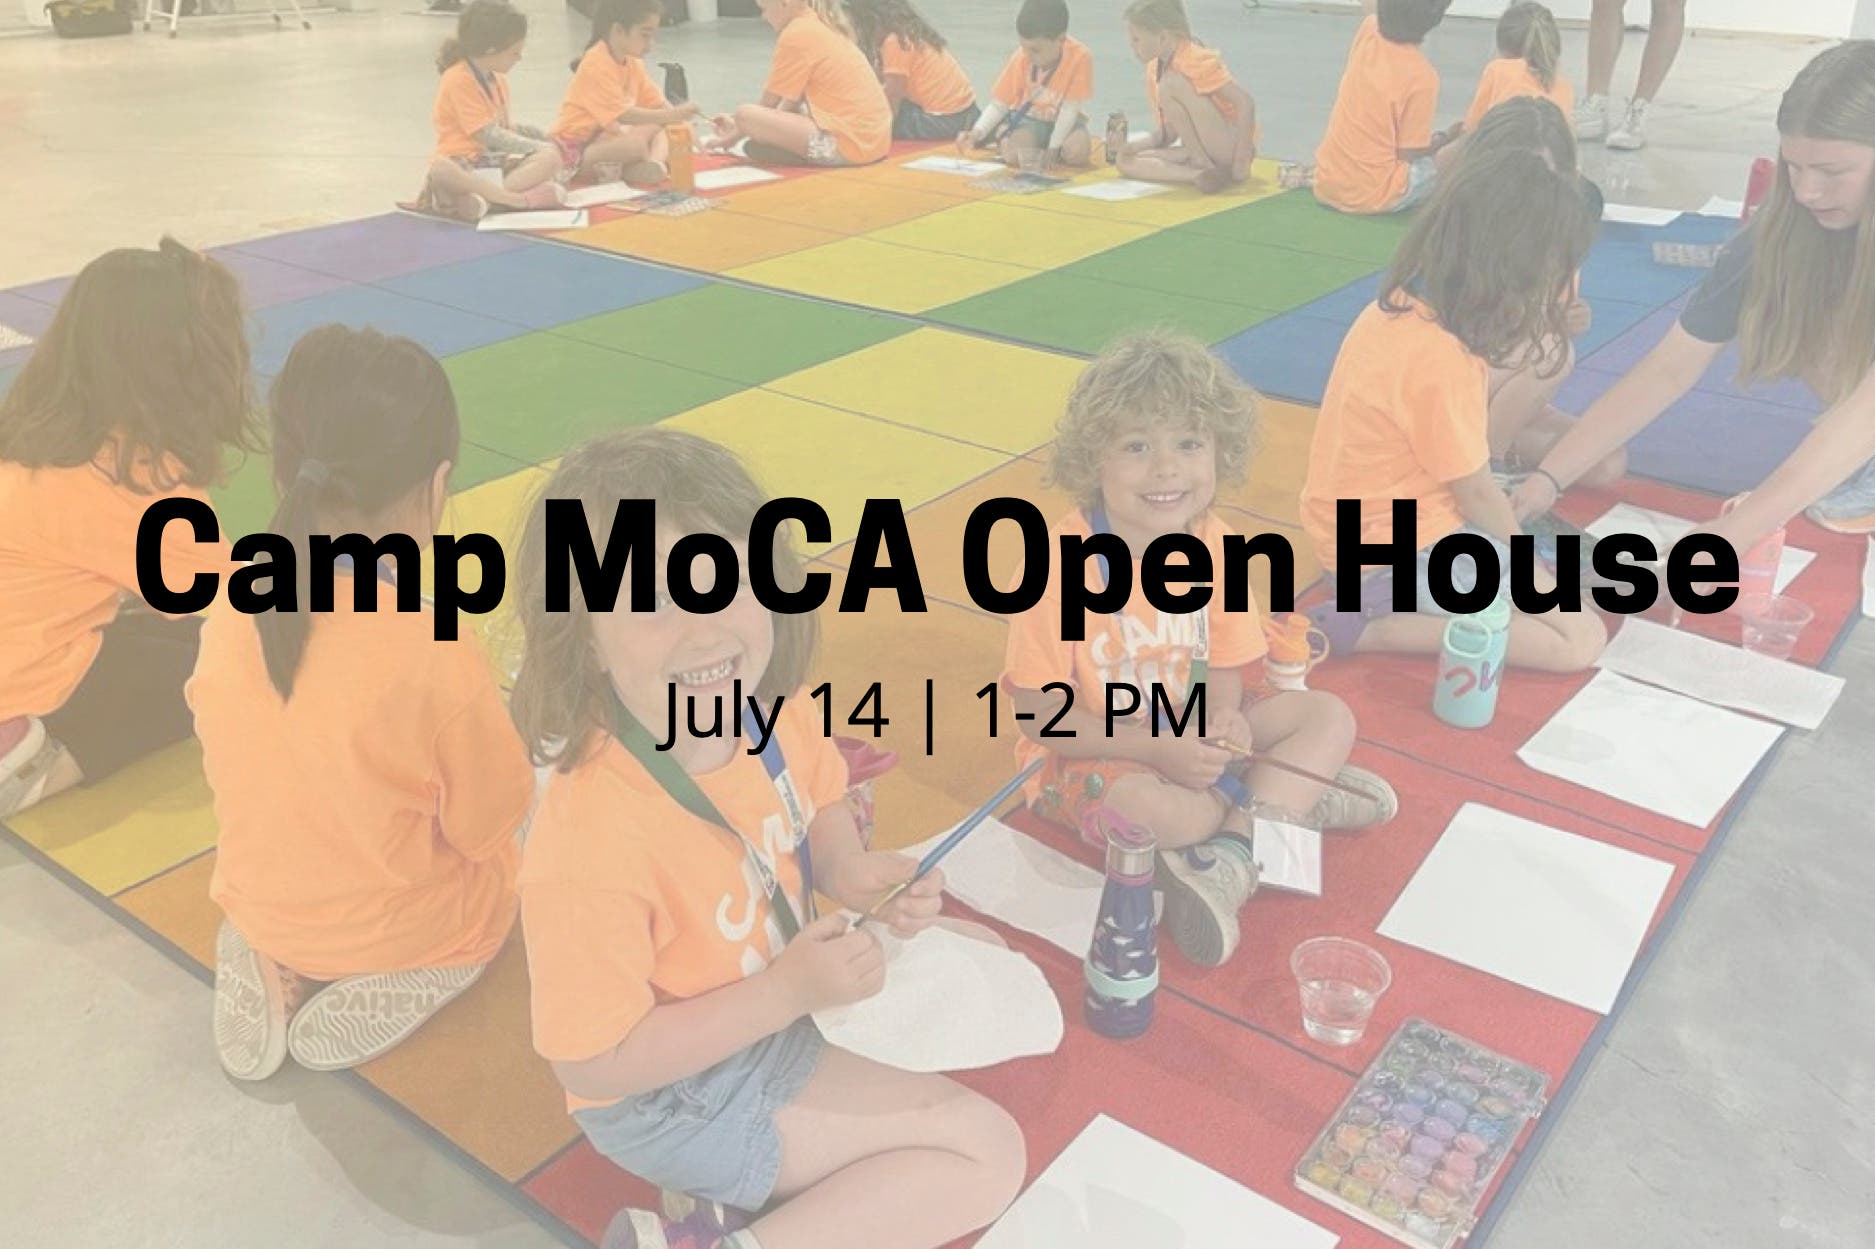 Camp MoCA Open House